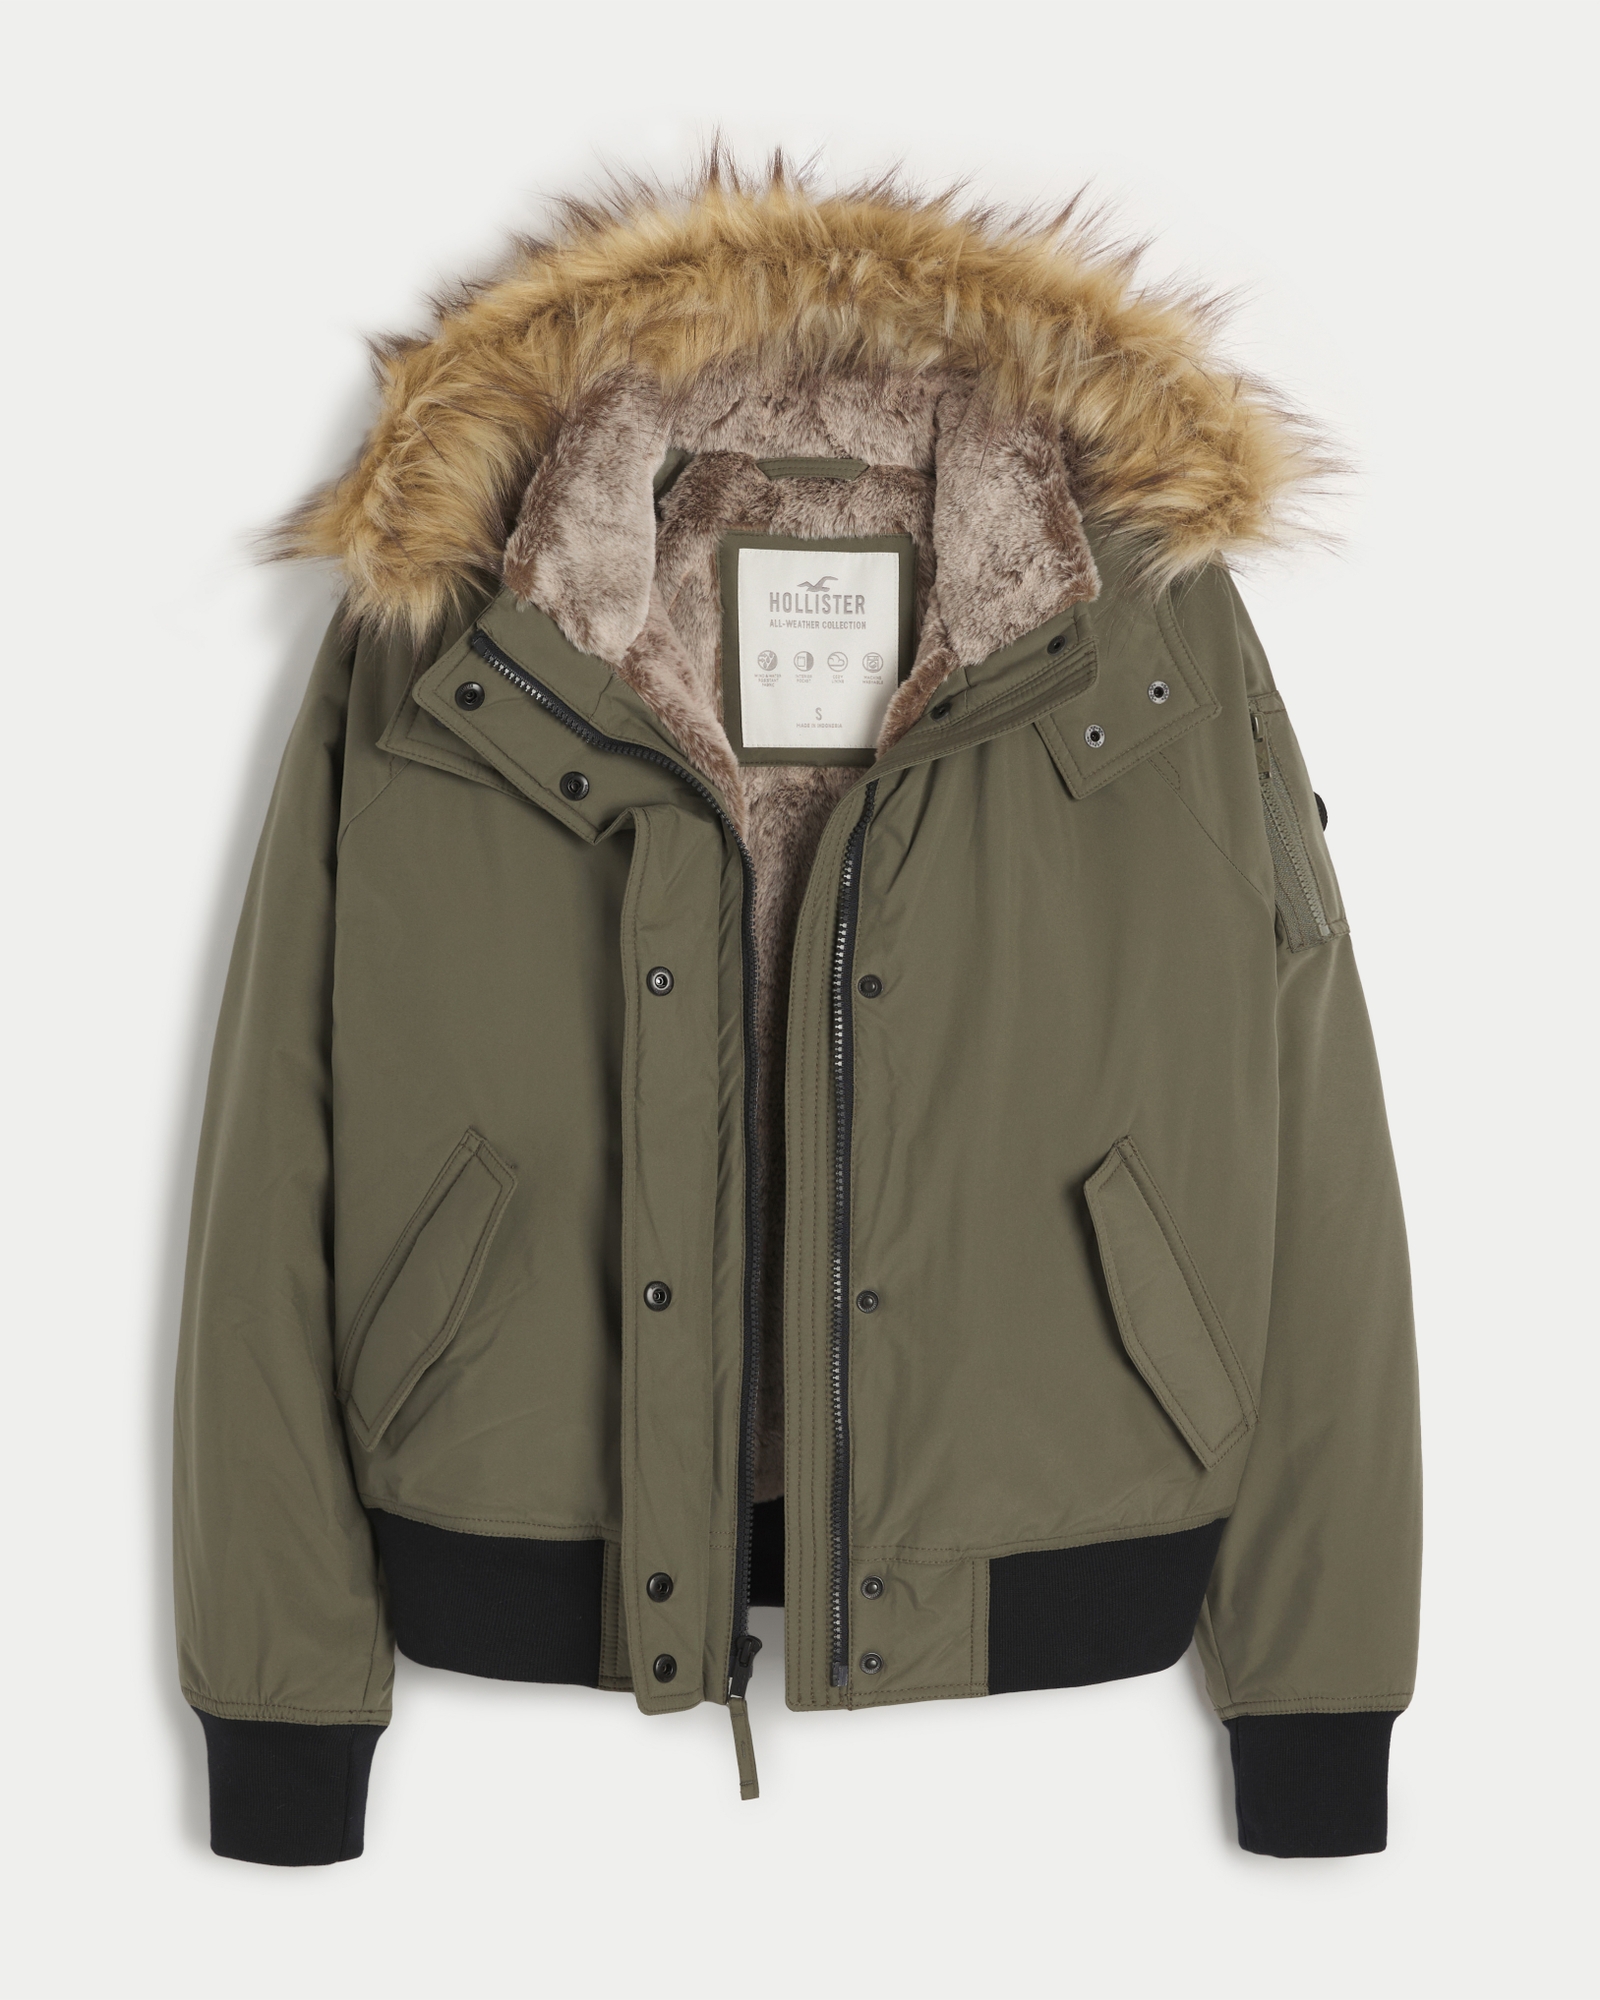 Jackets & Coats, Hollister All Weather Jacket